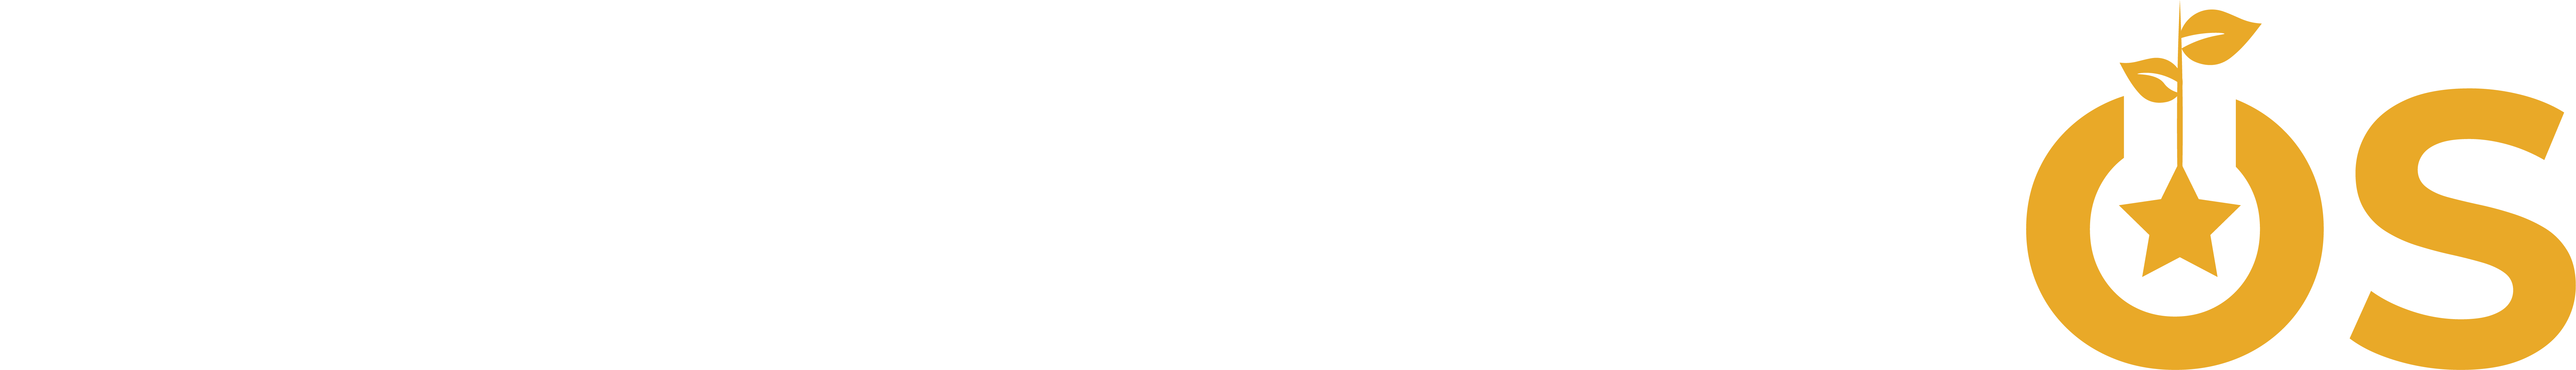 Semilleros logo